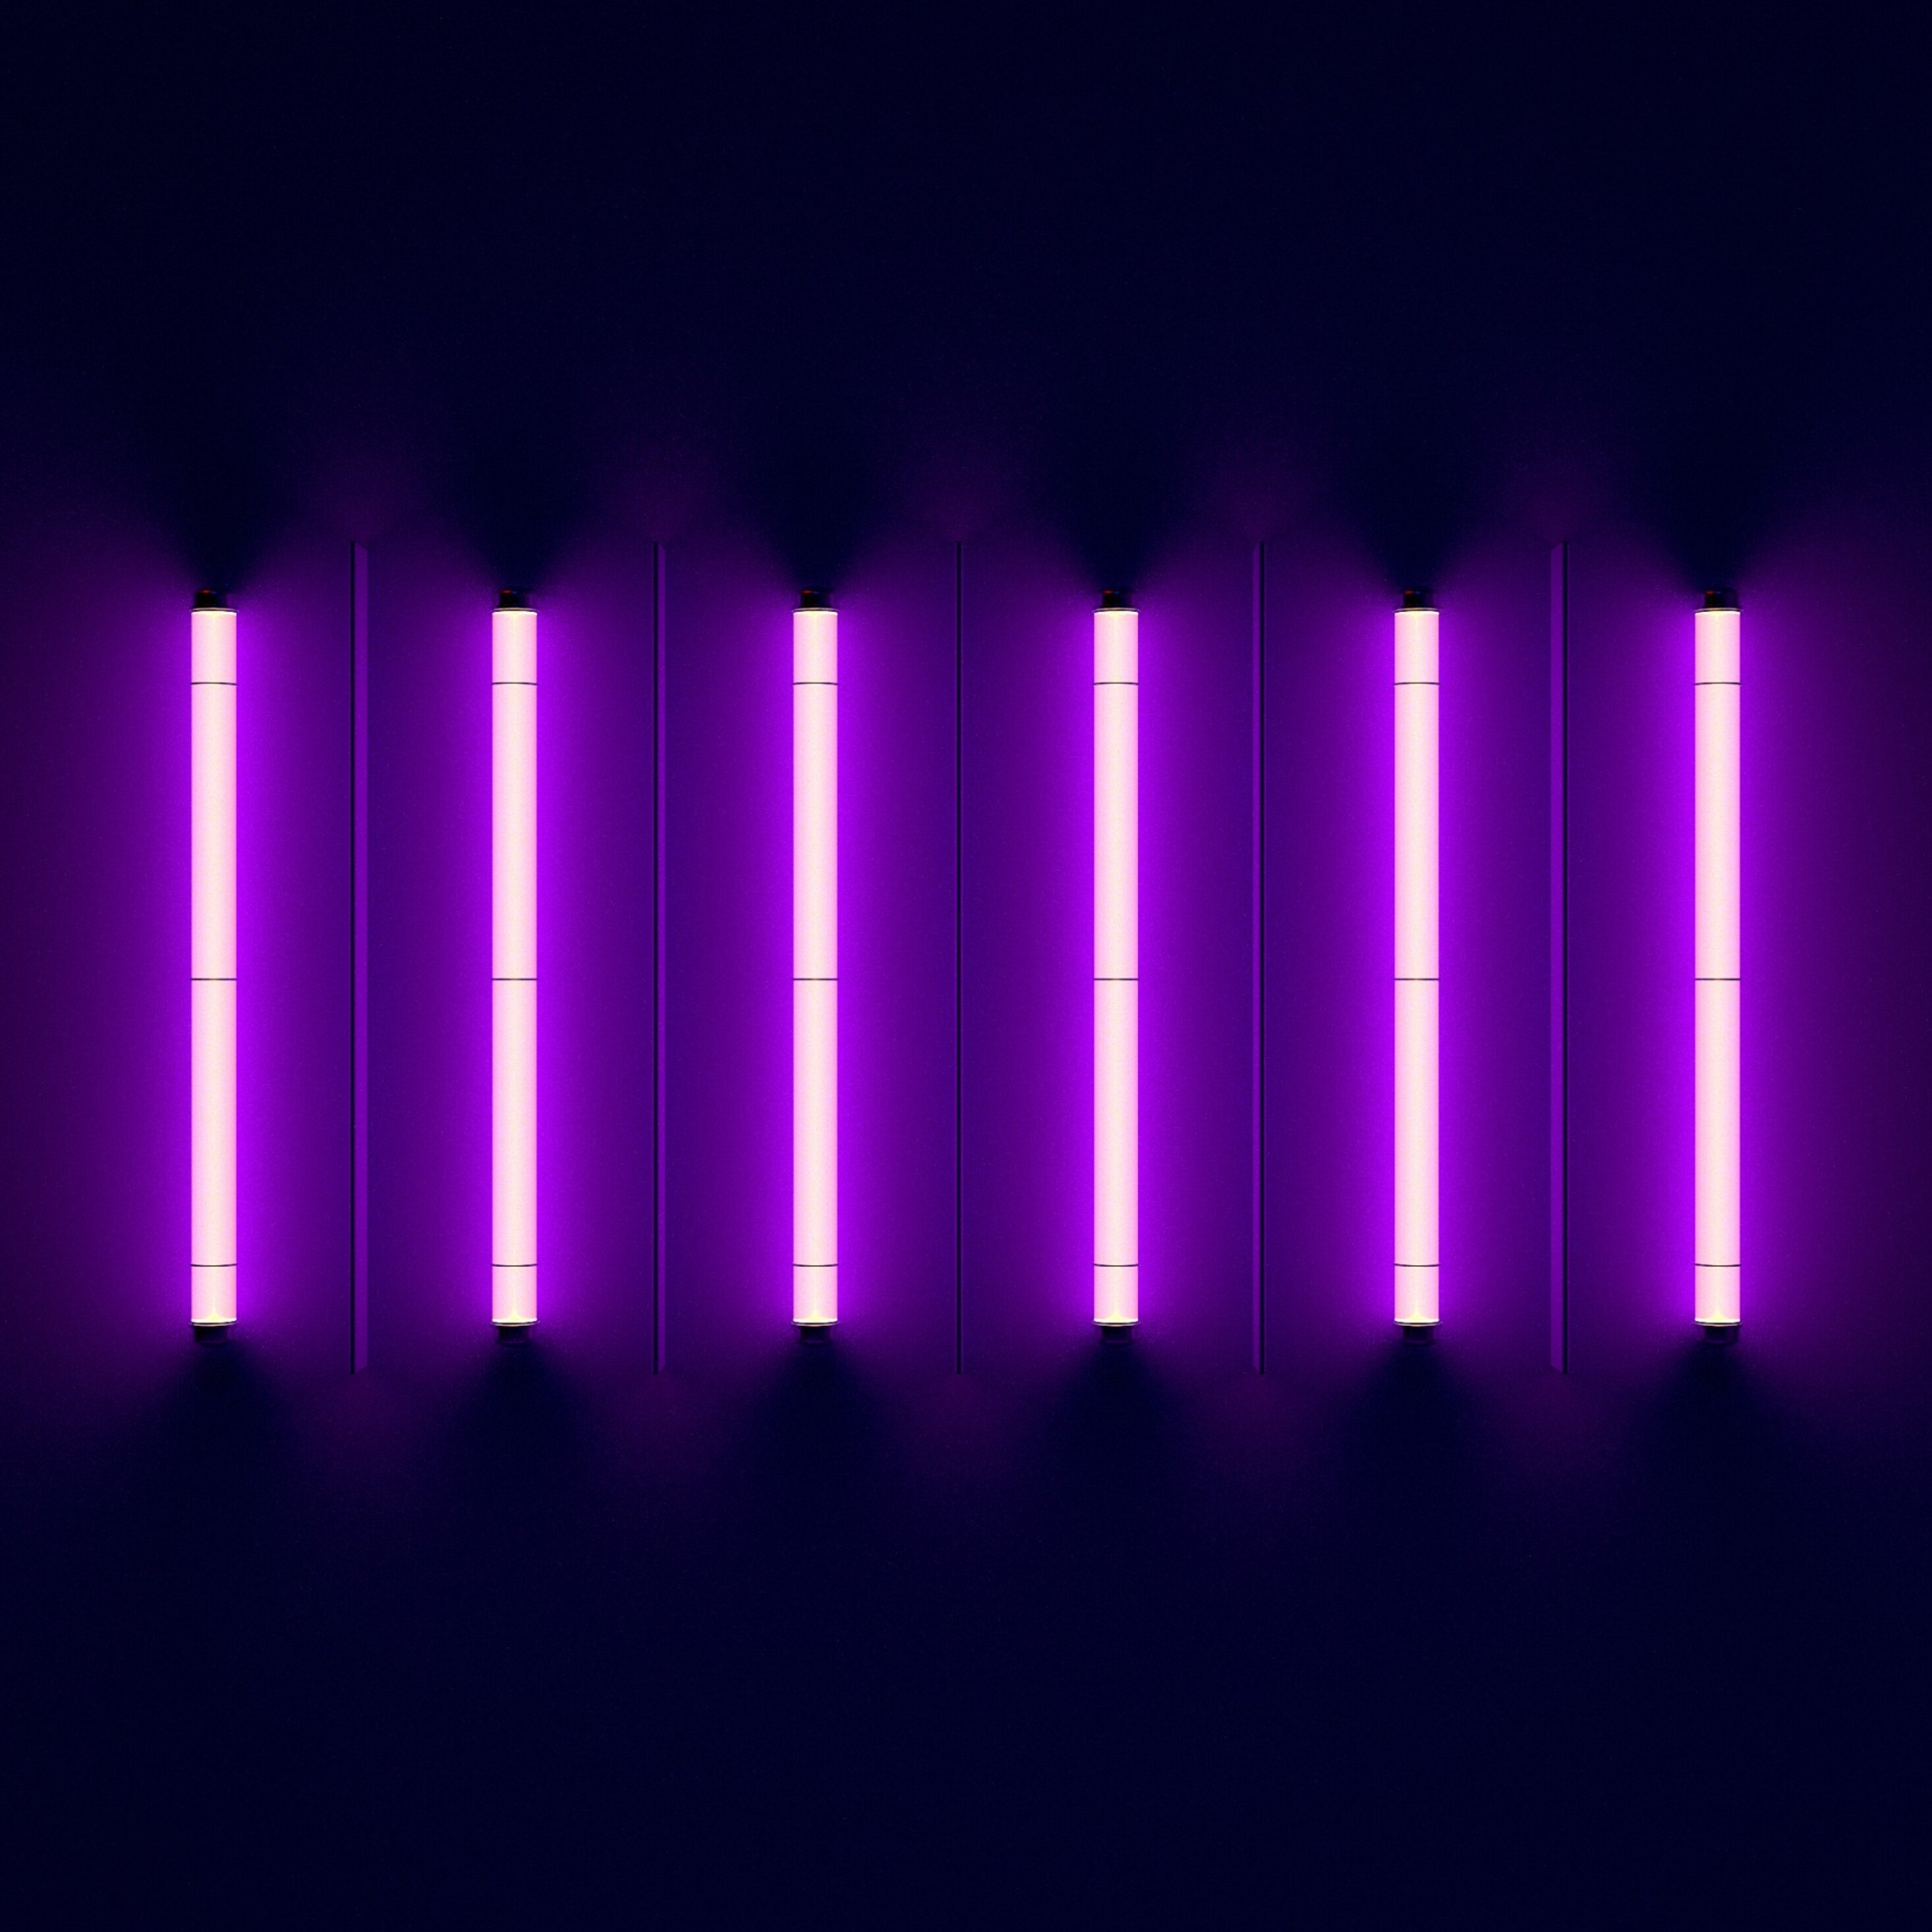 Neon Lights Purple iPad Pro Retina Display HD 4k Wallpaper, Image, Background, Photo and Picture